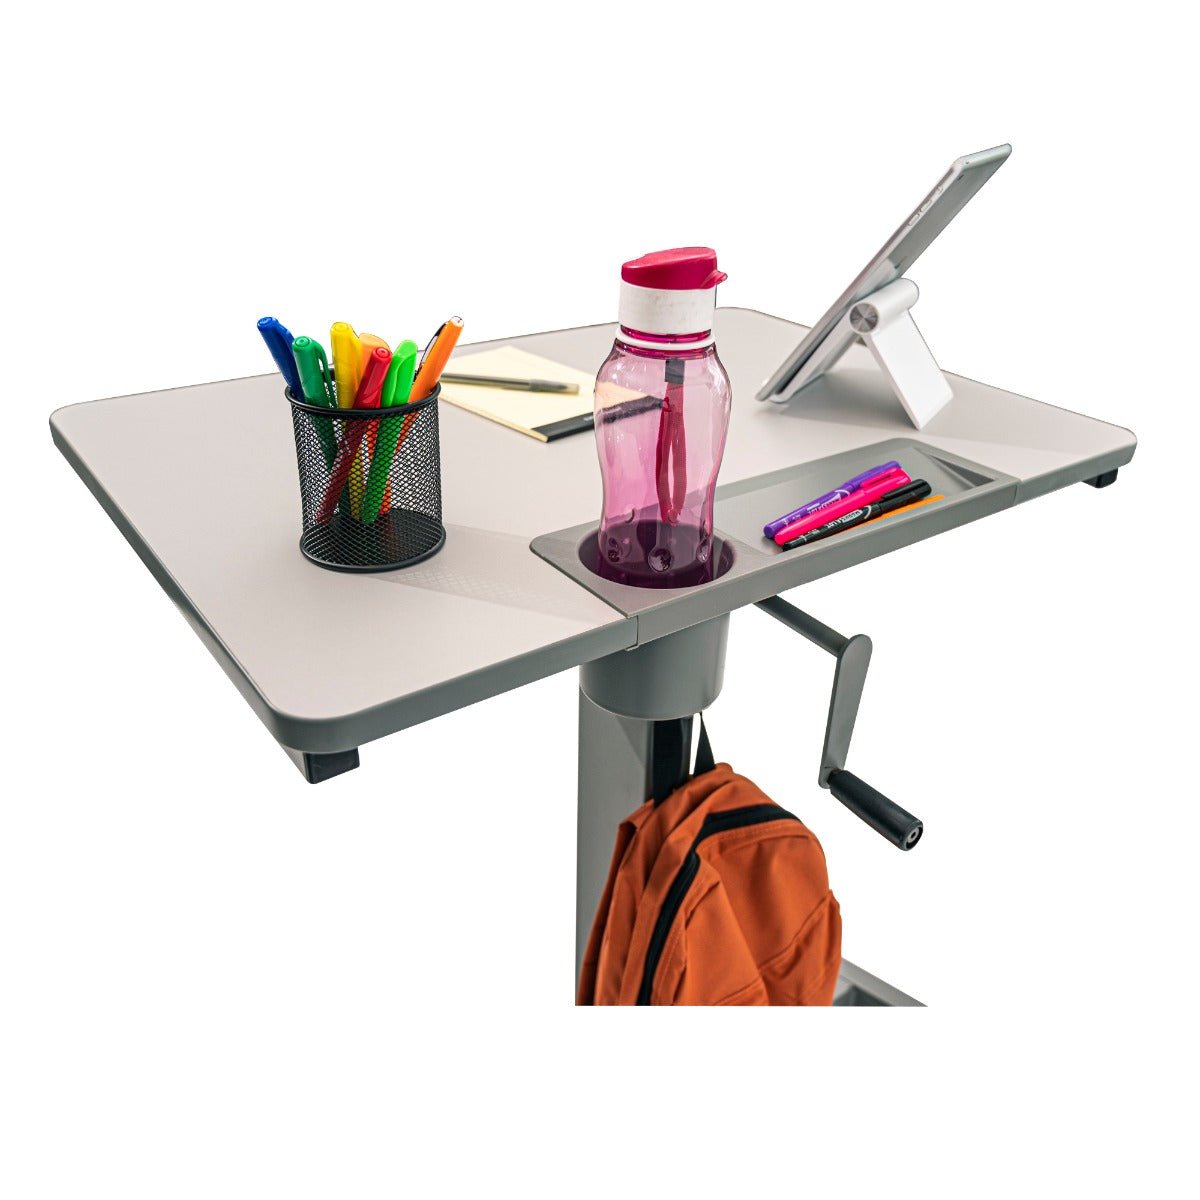 Luxor STUDENT-C Student Desk - Sit Stand Desk with Crank Handle (LUX-STUDENT-C) - SchoolOutlet